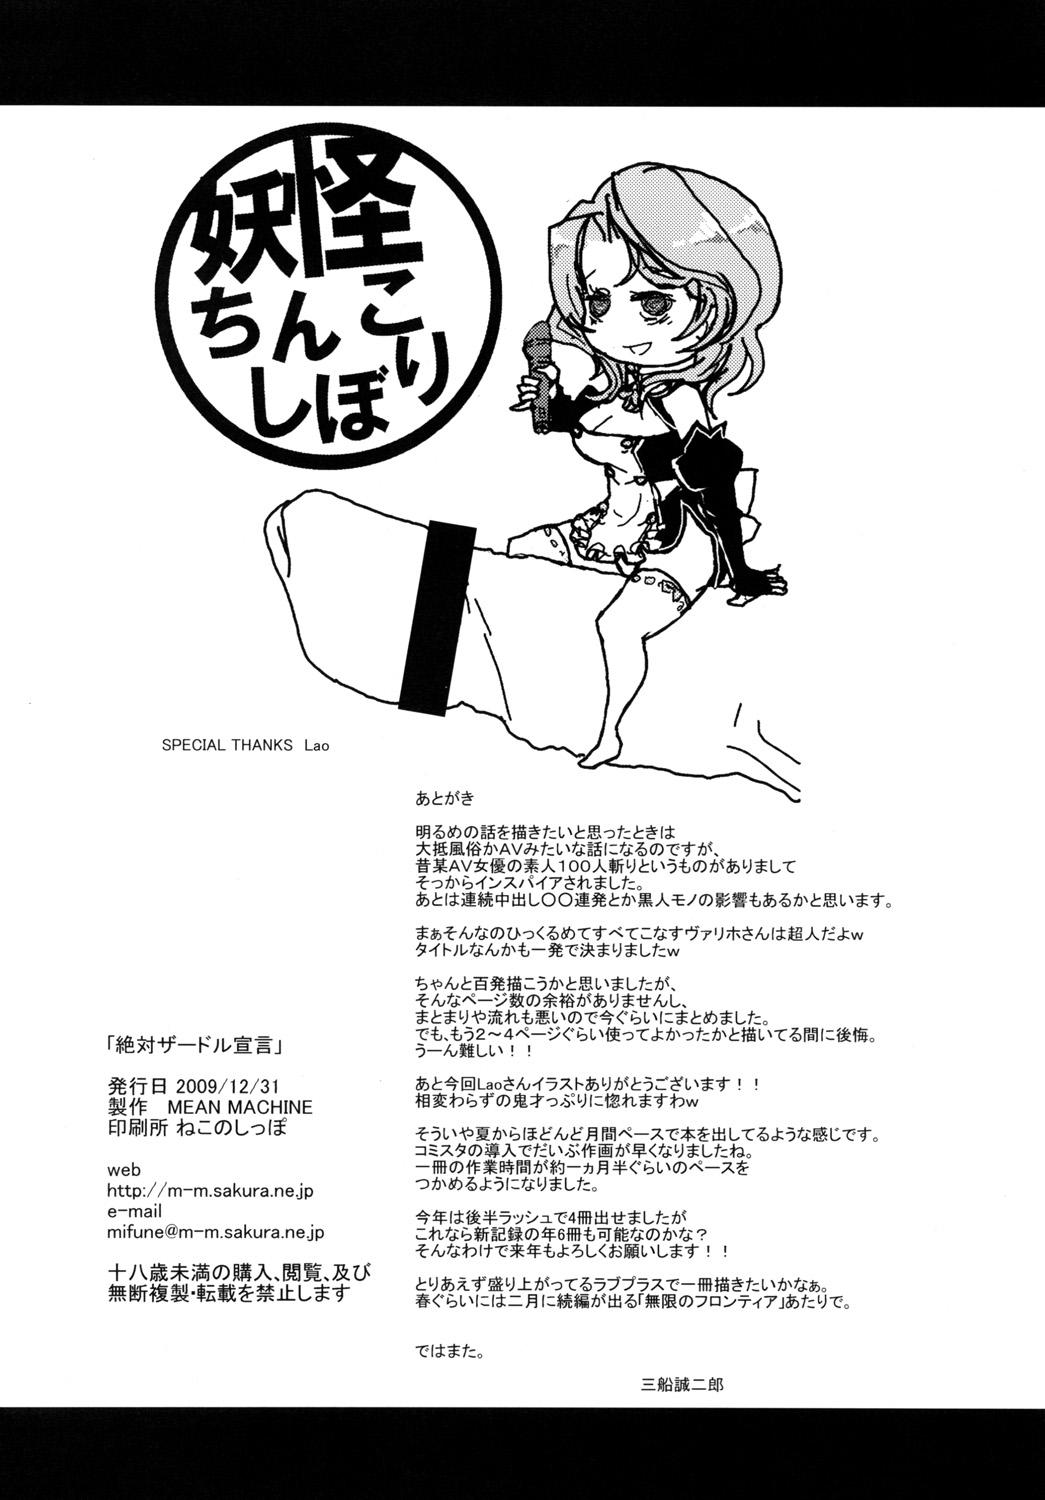 Girlfriends 絶対ザードル☆宣言 - Dream c club Verification - Page 25